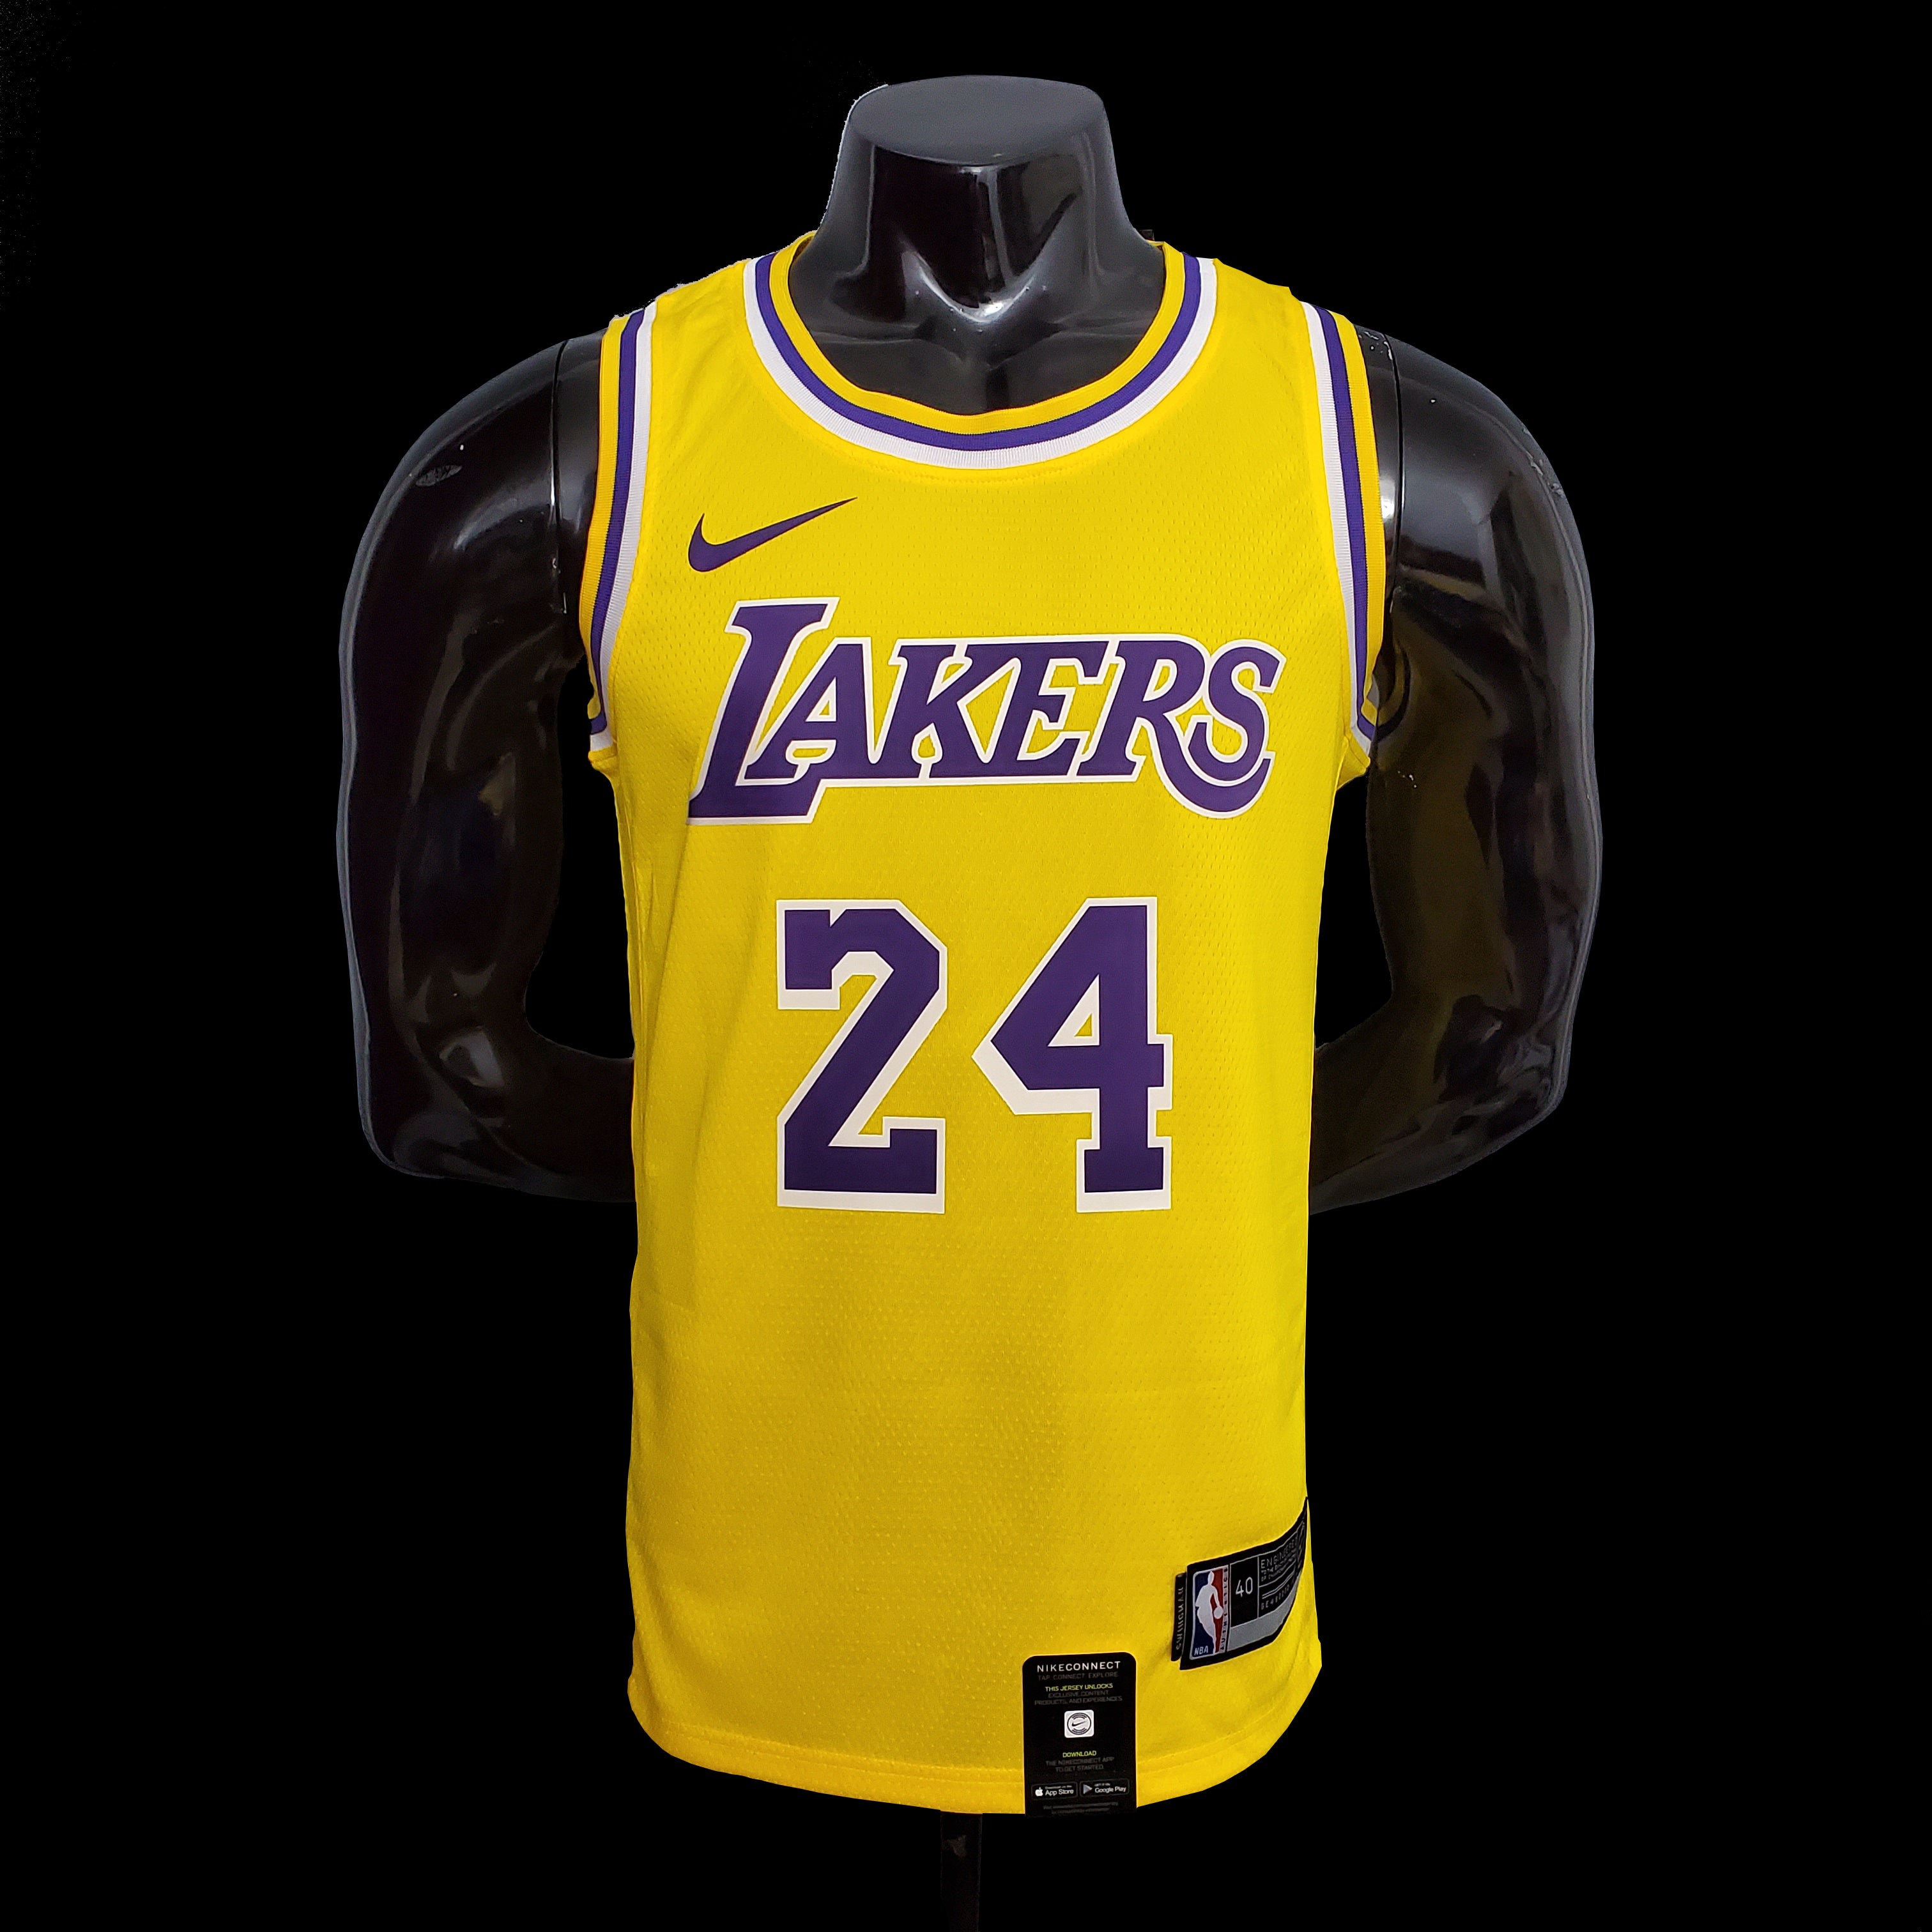 Kobe Bryant Jerseys, Kobe Bryant Shirt, NBA Kobe Bryant Gear & Merchandise